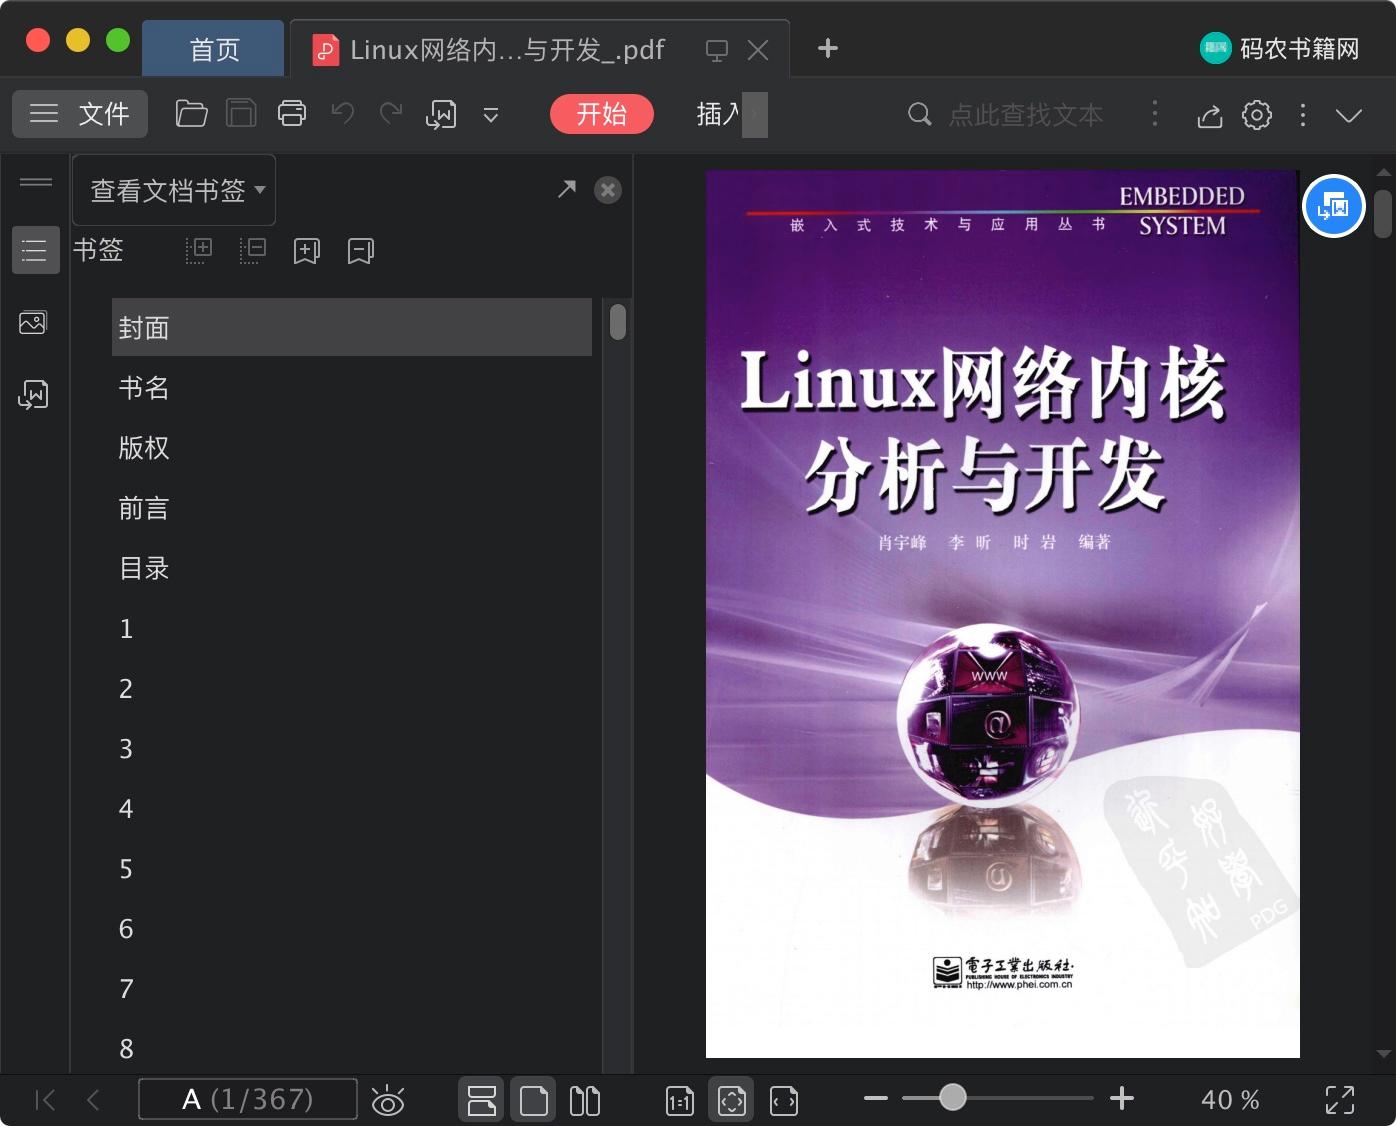 Linux教程网络内核分析与开发pdf电子书籍下载百度网盘